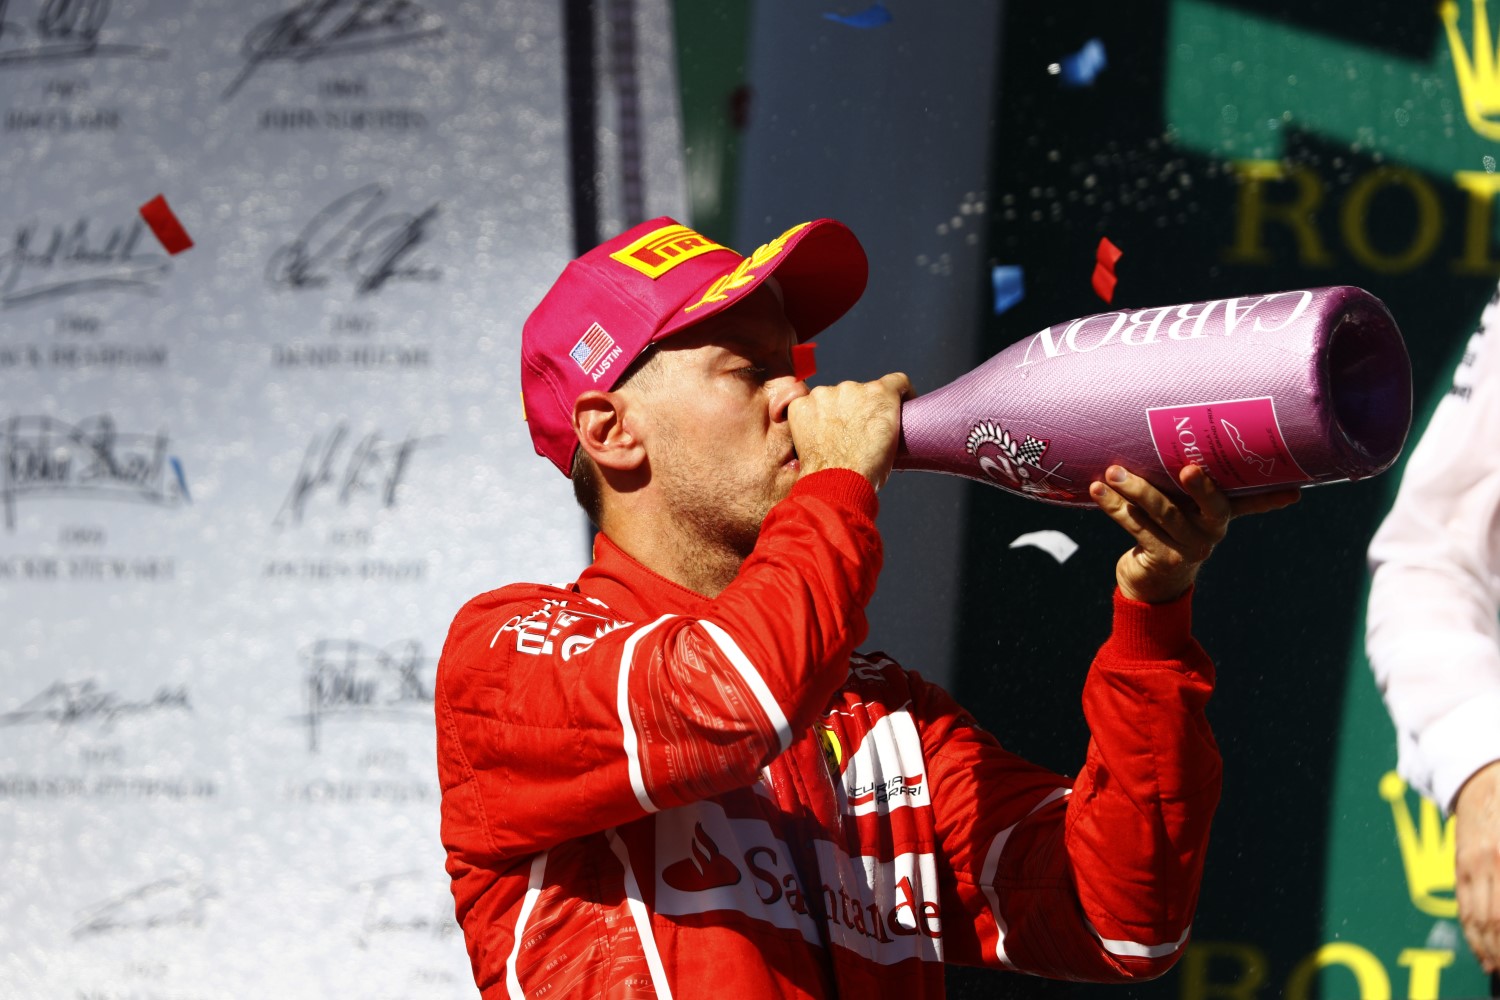 Vettel knows the Ferrari cannot match the Aldo Costa Mercedes